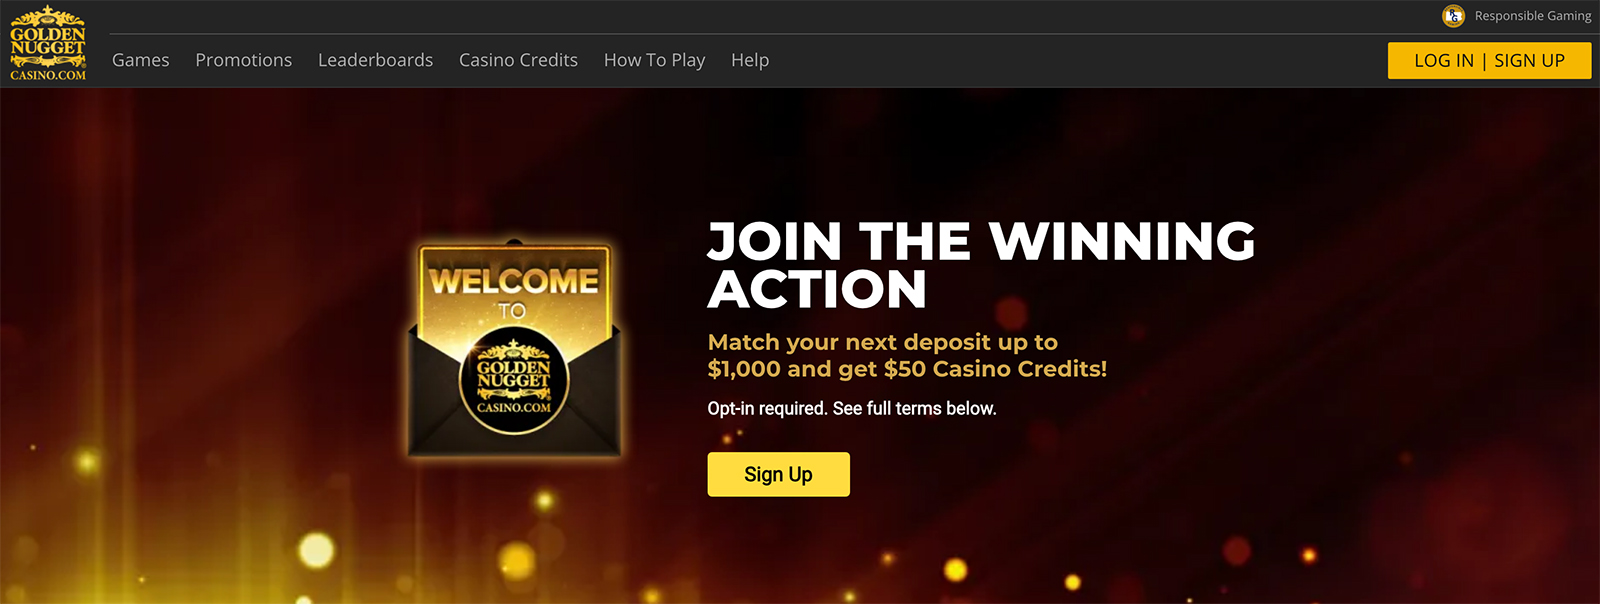 Golden Nugget PA Online Casino Promo Code Landing Page